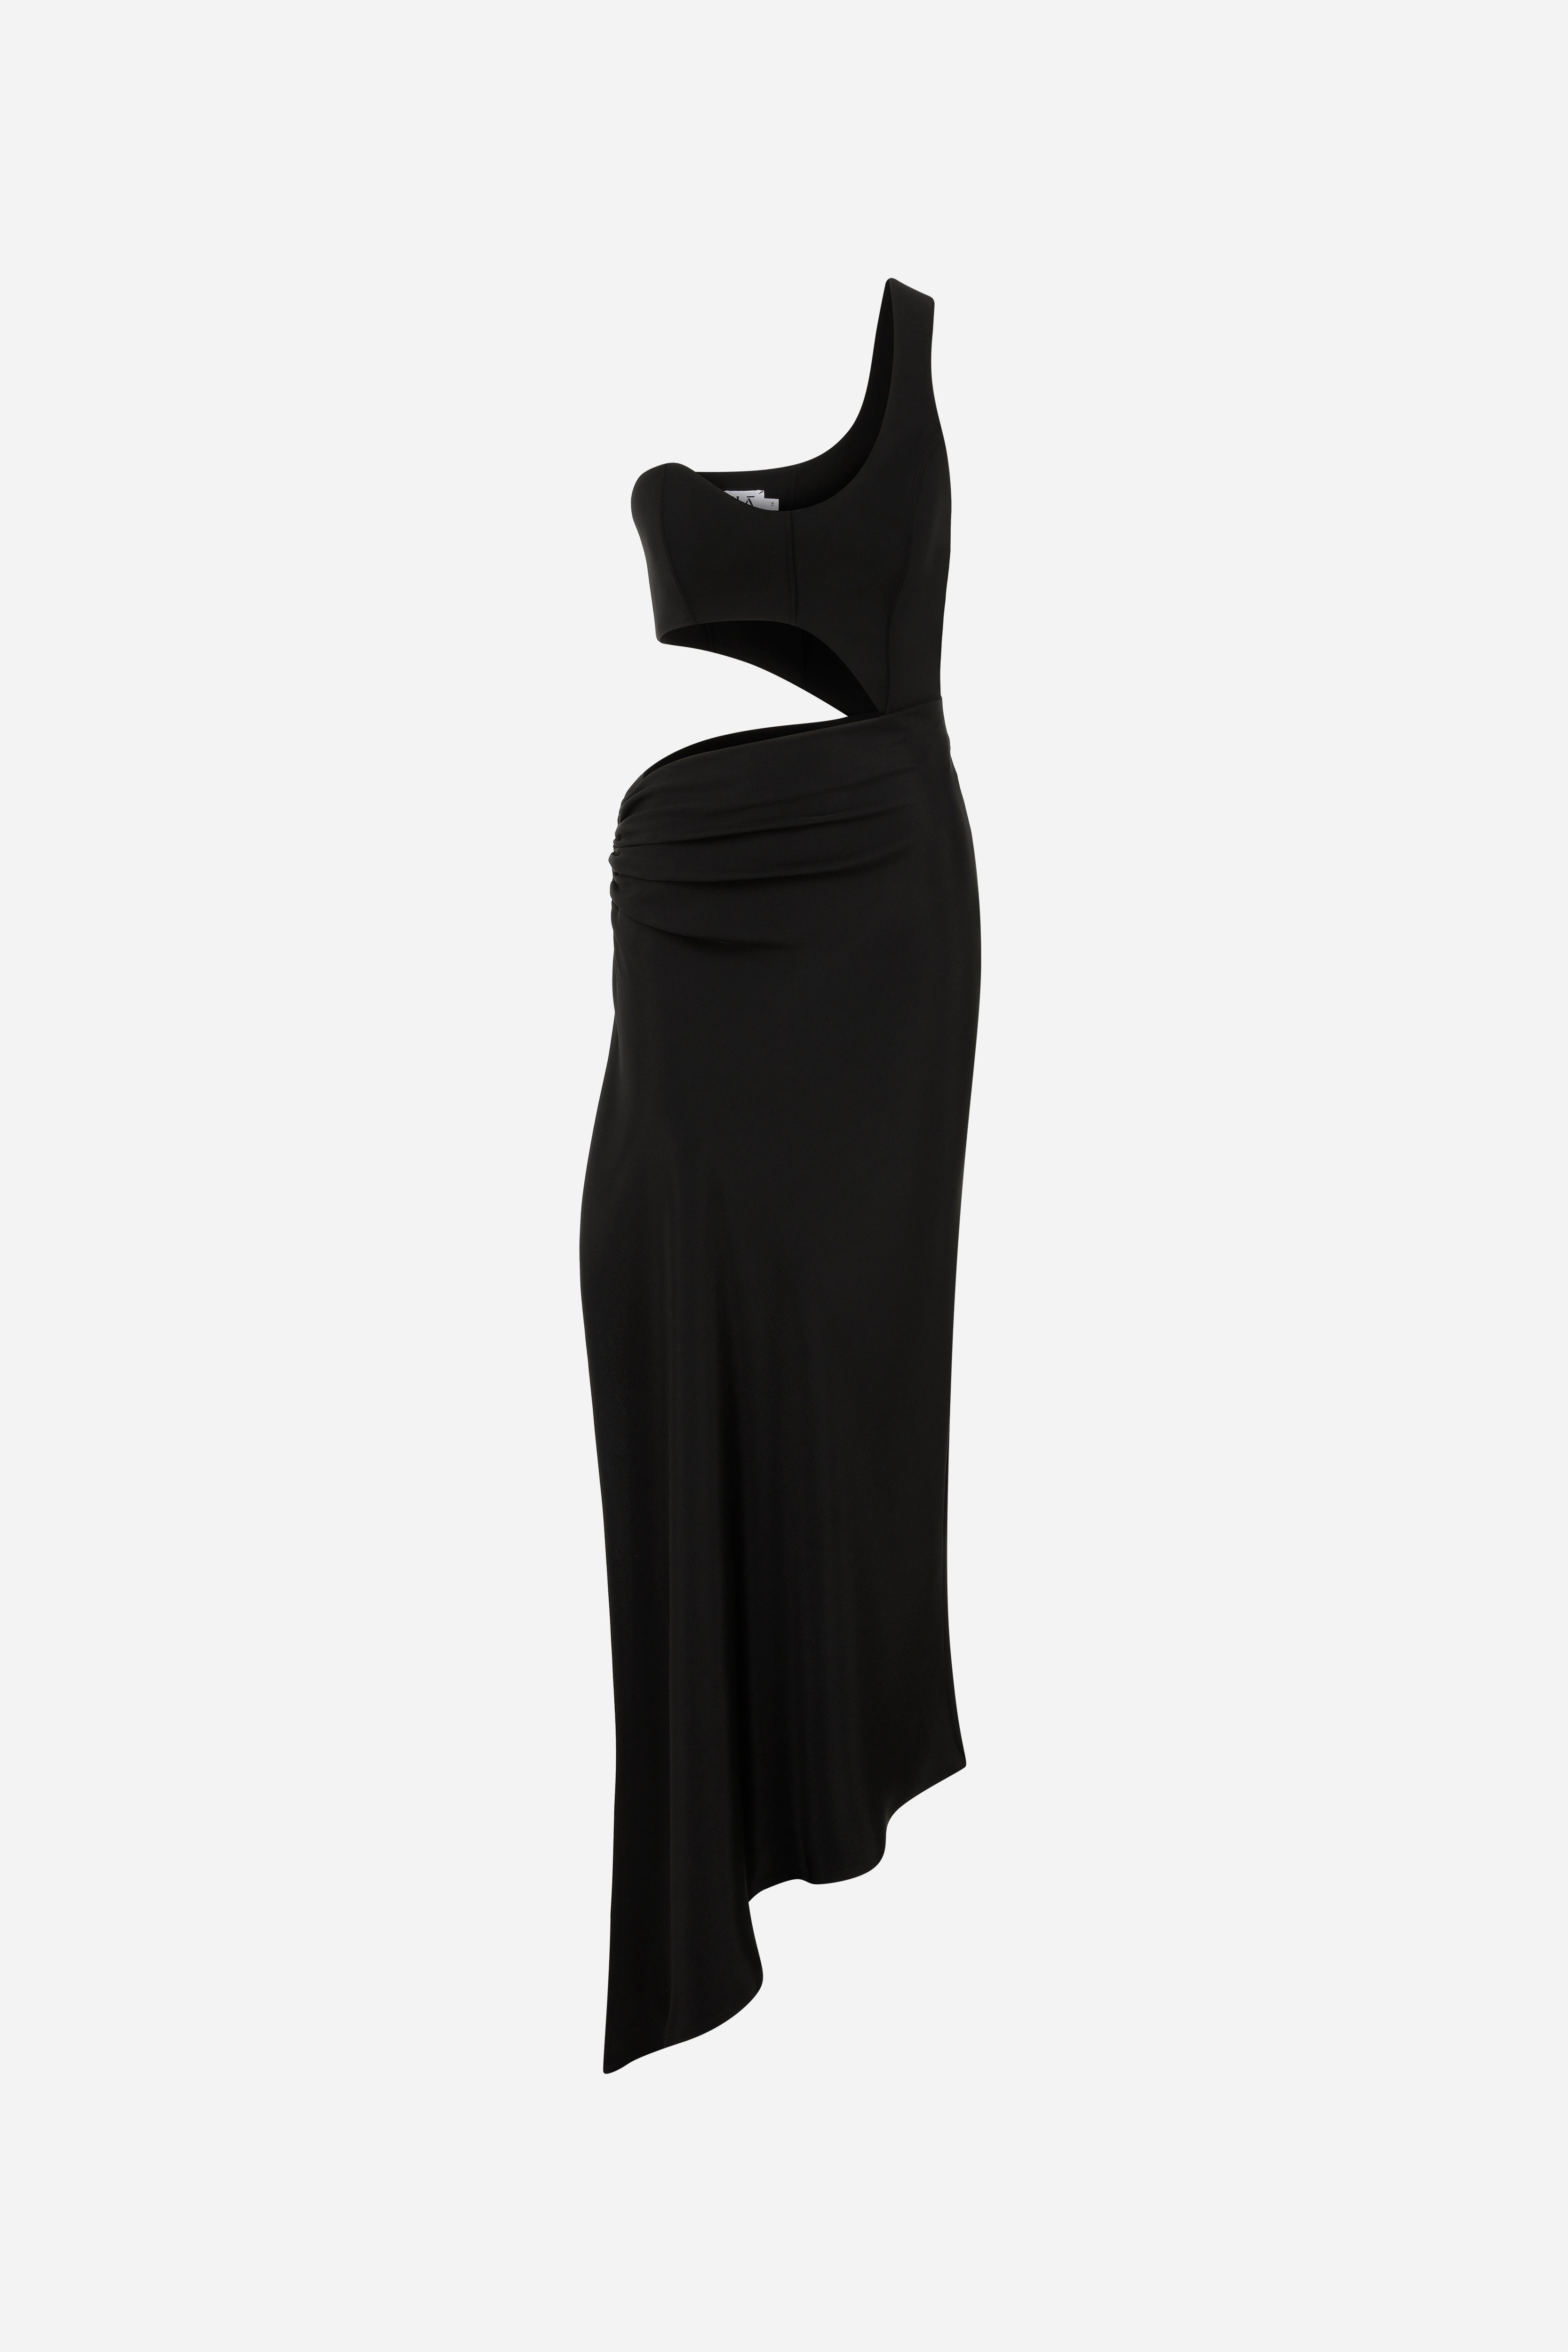 Helen - Corsetry Inspired One-Shoulder Midi Dress